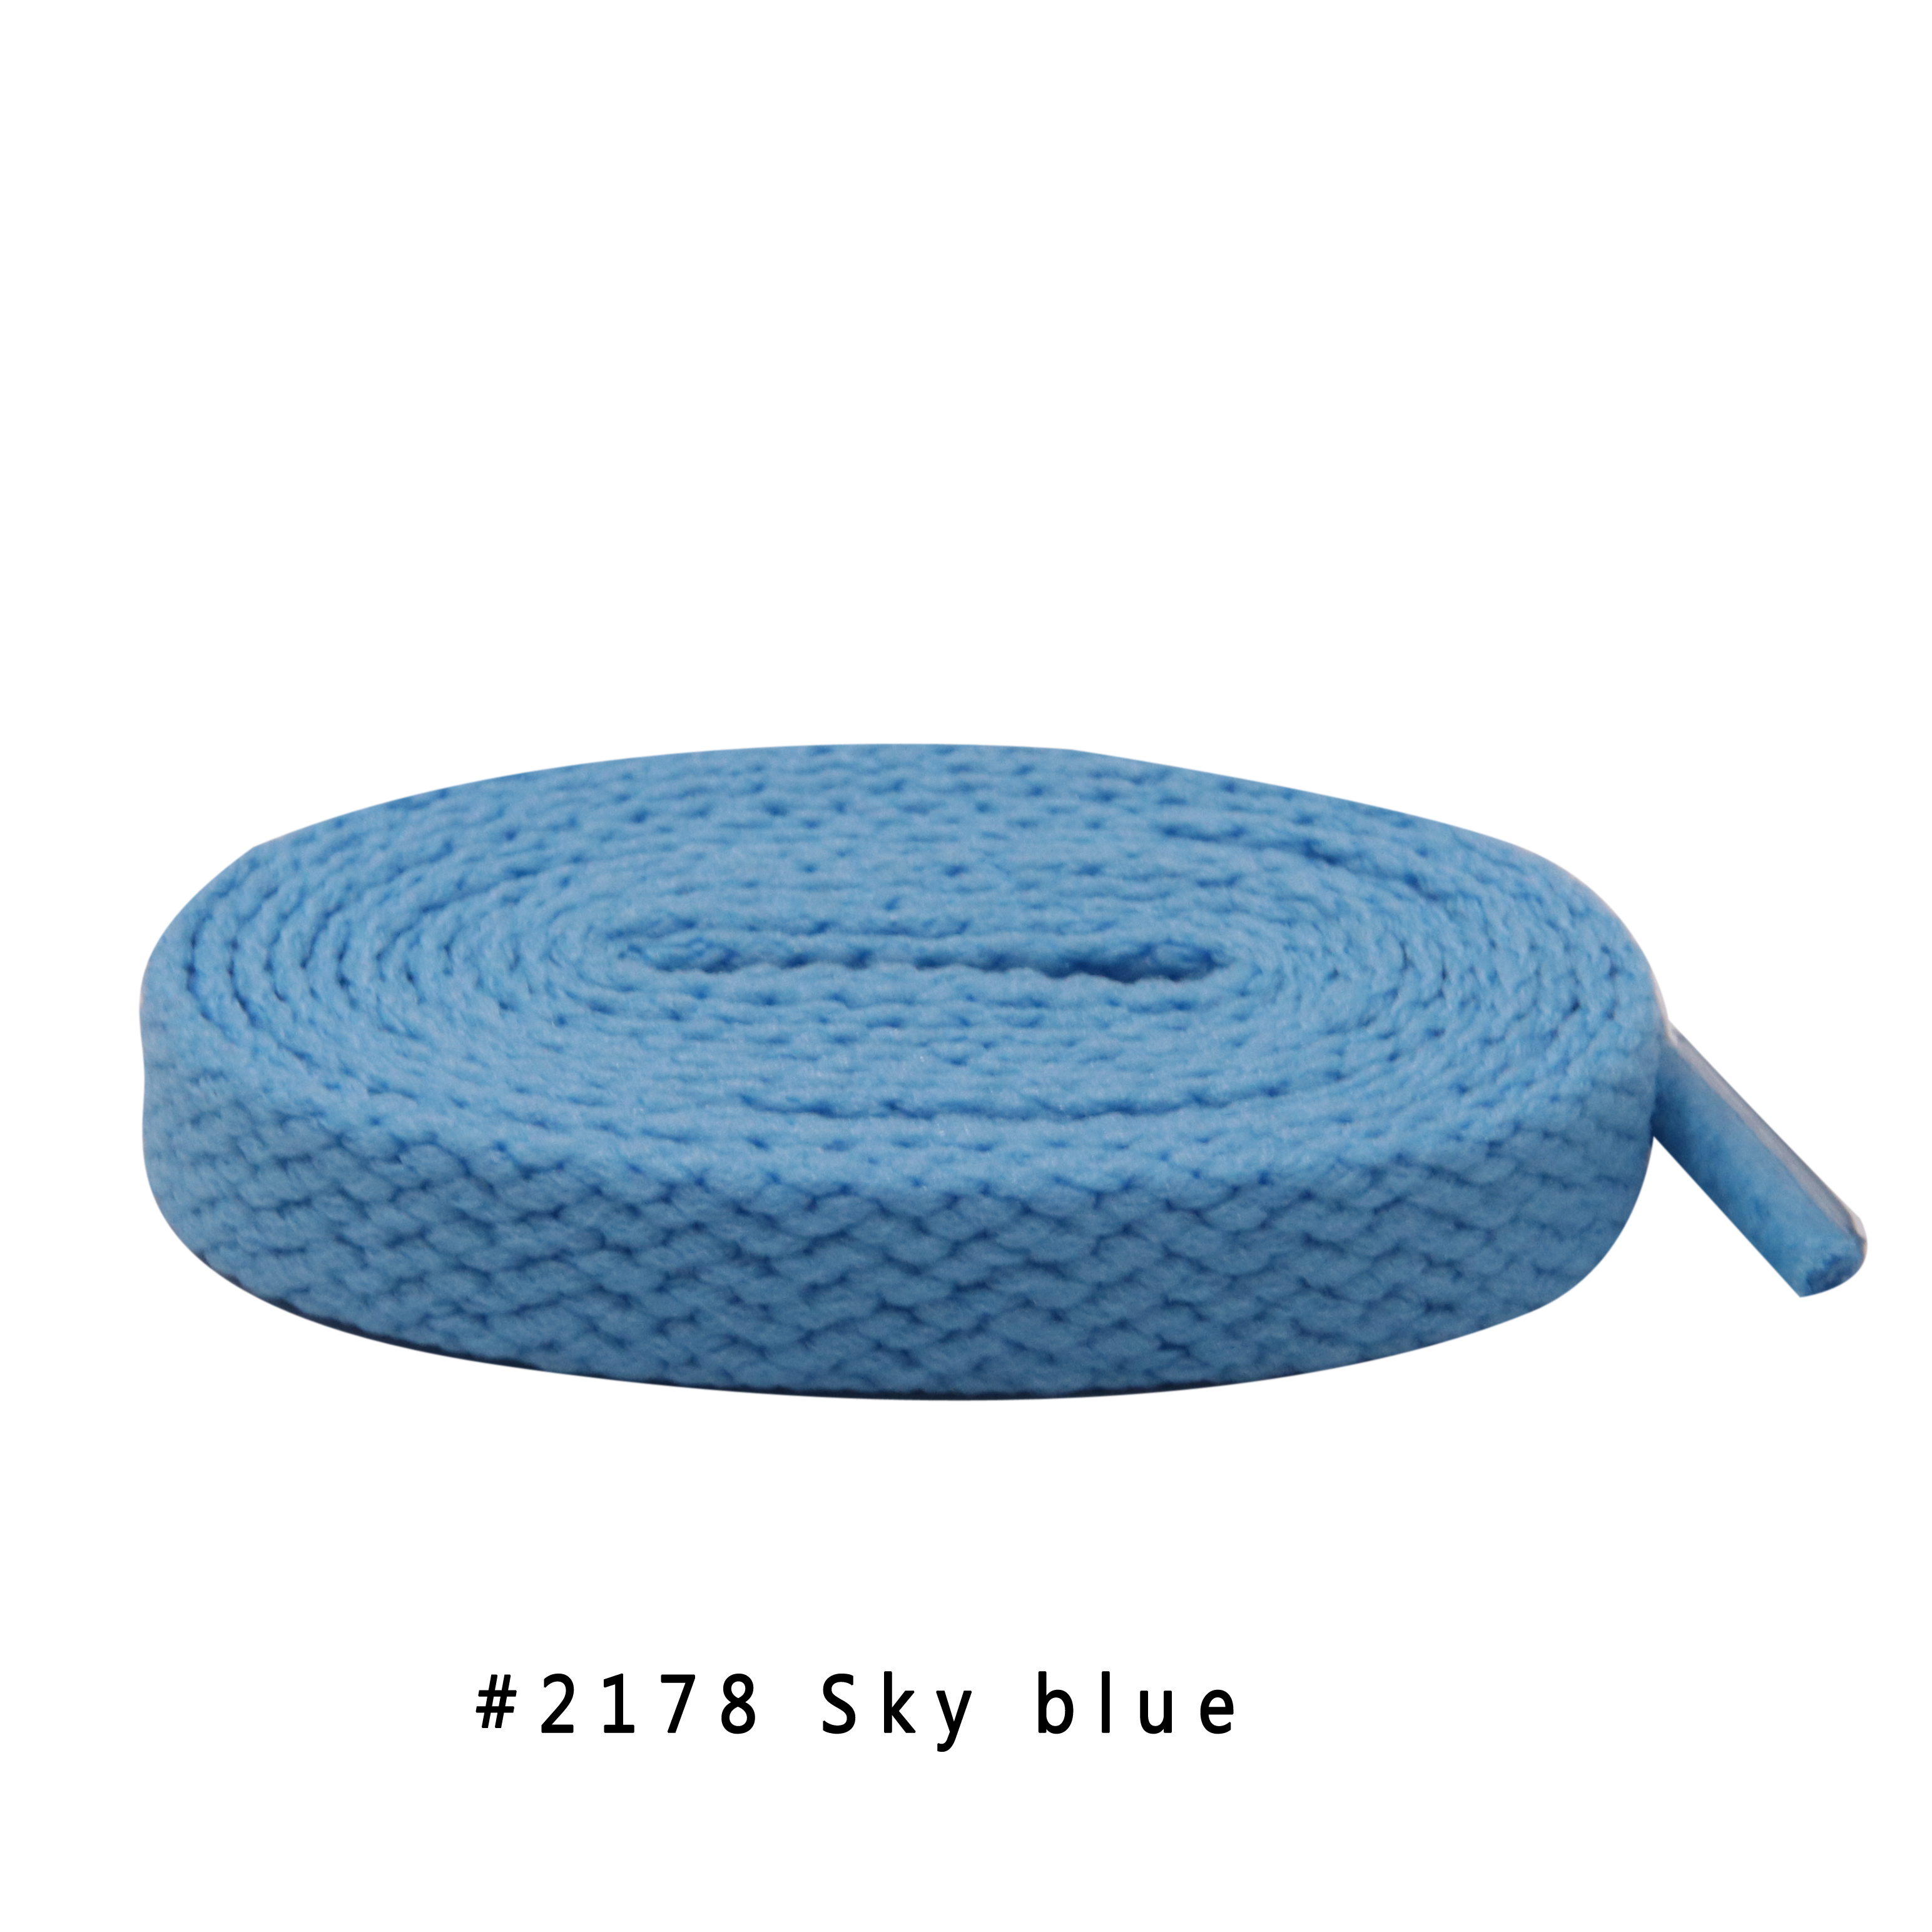 #2178 Sky blue